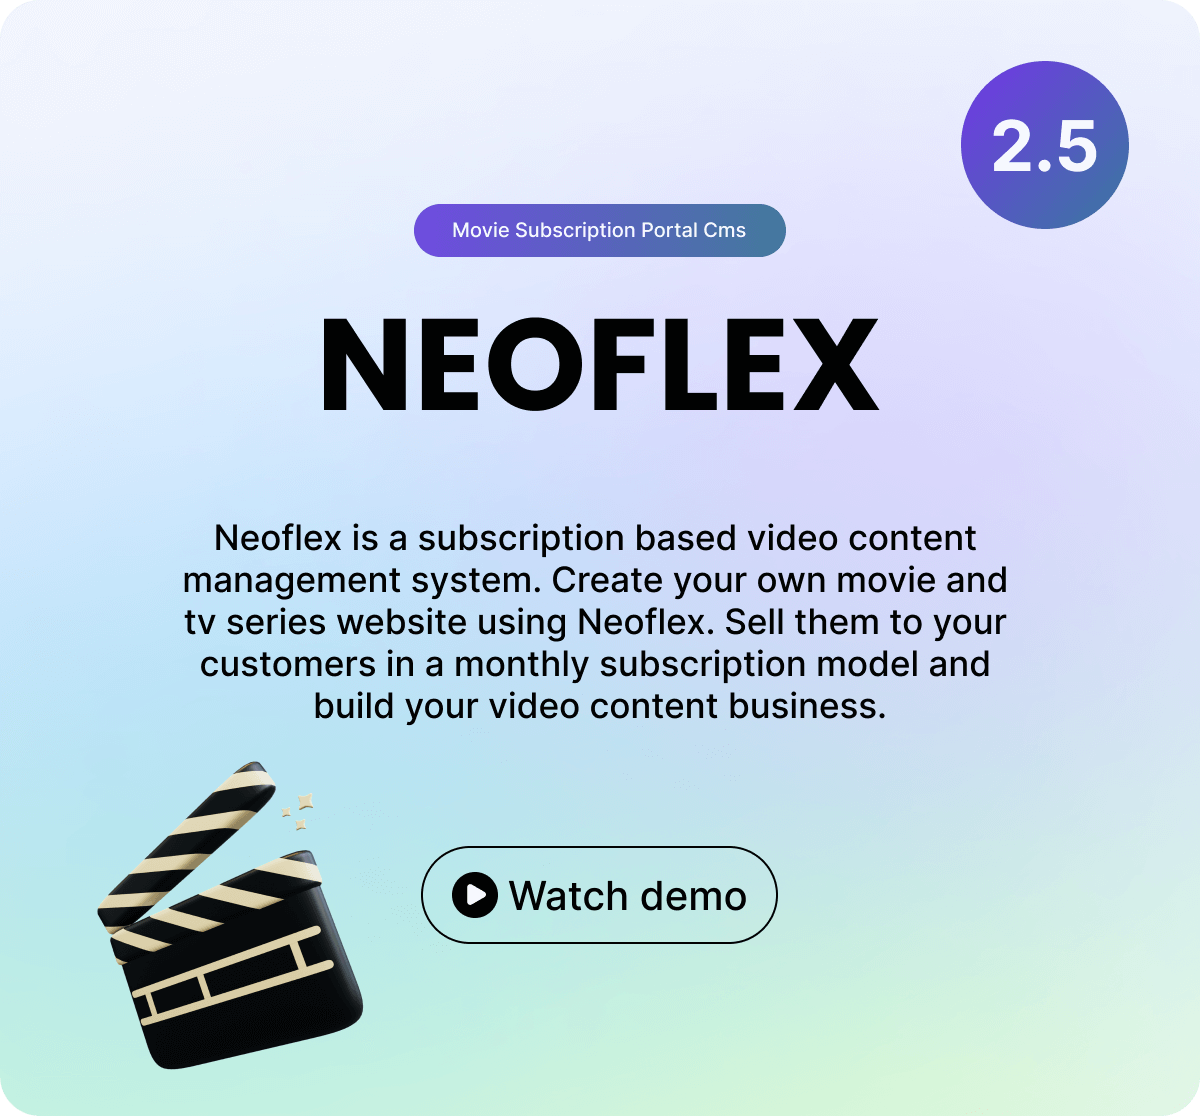 Neoflex Movie Subscription Portal Cms - 2